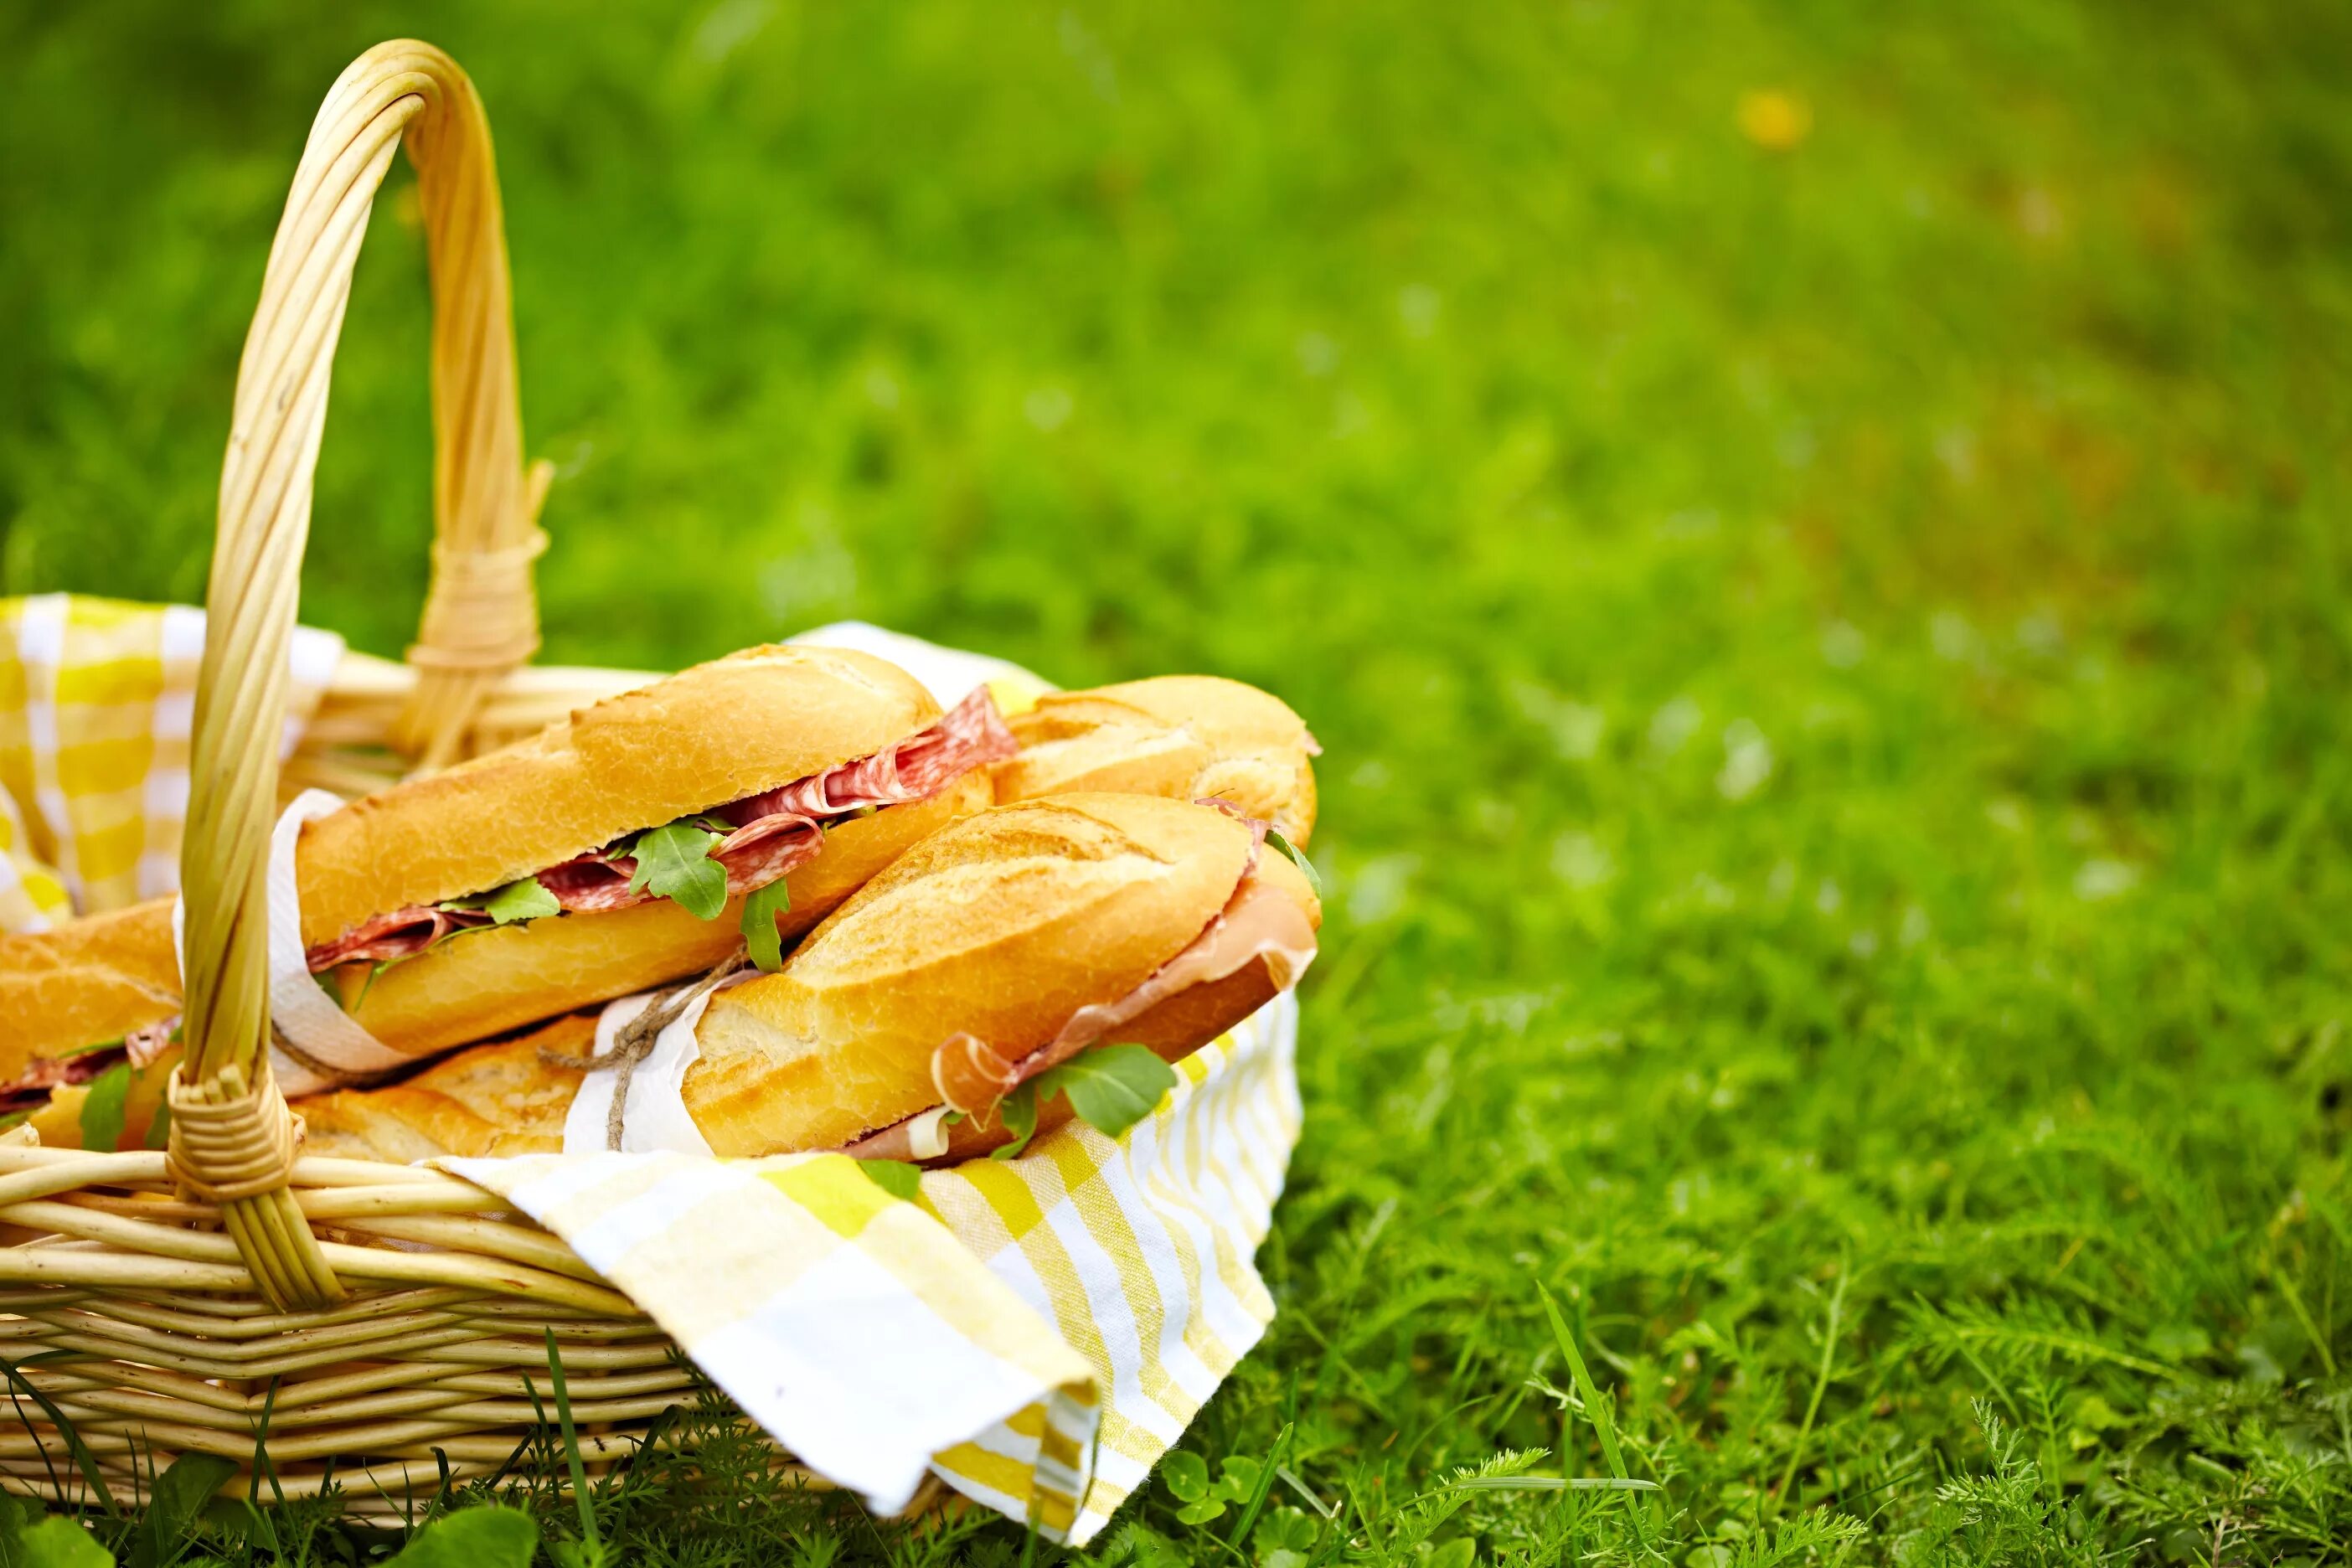 Корзинка для пикника с едой. Корзинка для пикника с продуктами. Пикника природе еда в корзинке. Пикник на природе. Пикник из коры